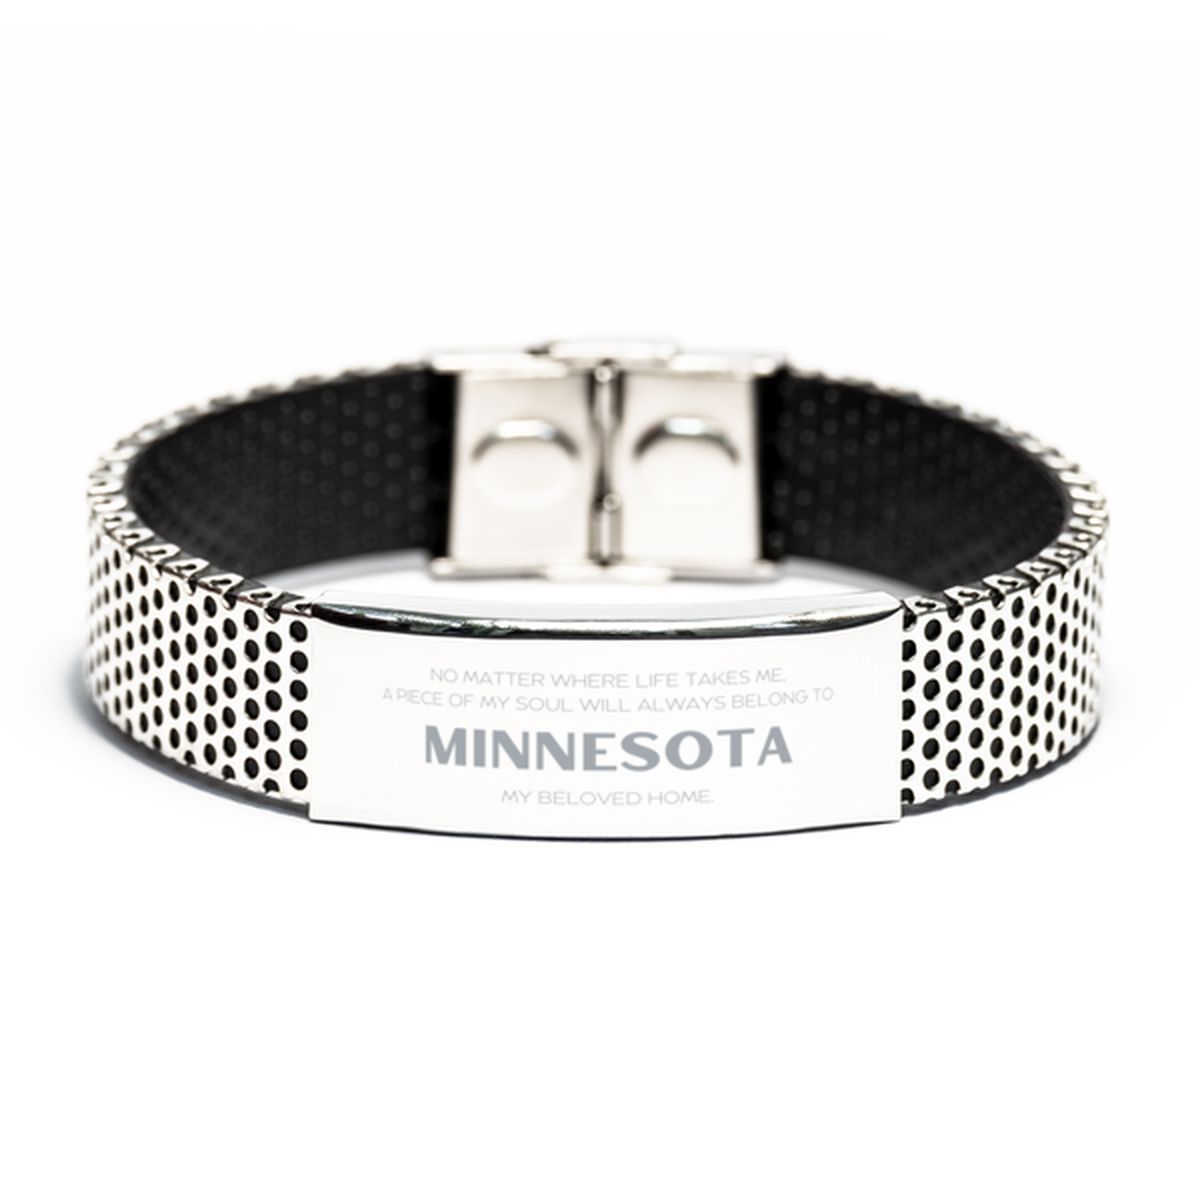 Love Minnesota State Gifts, My soul will always belong to Minnesota, Proud Stainless Steel Bracelet, Birthday Unique Gifts For Minnesota Men, Women, Friends